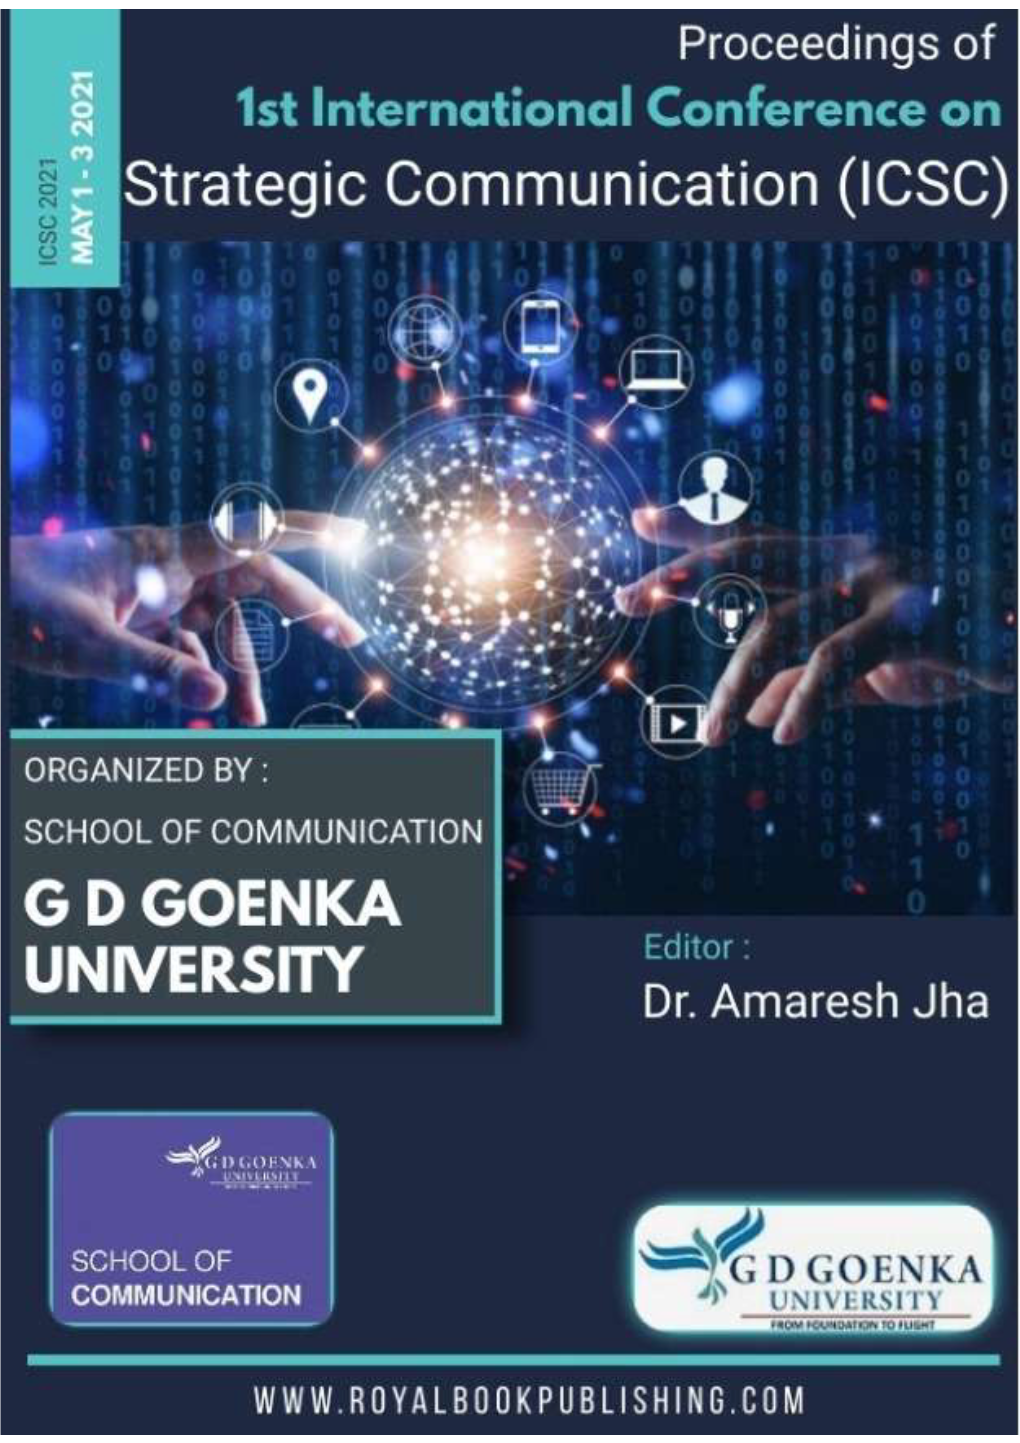 School of Communication GD GOENKA UNIVERSITY Editor Dr